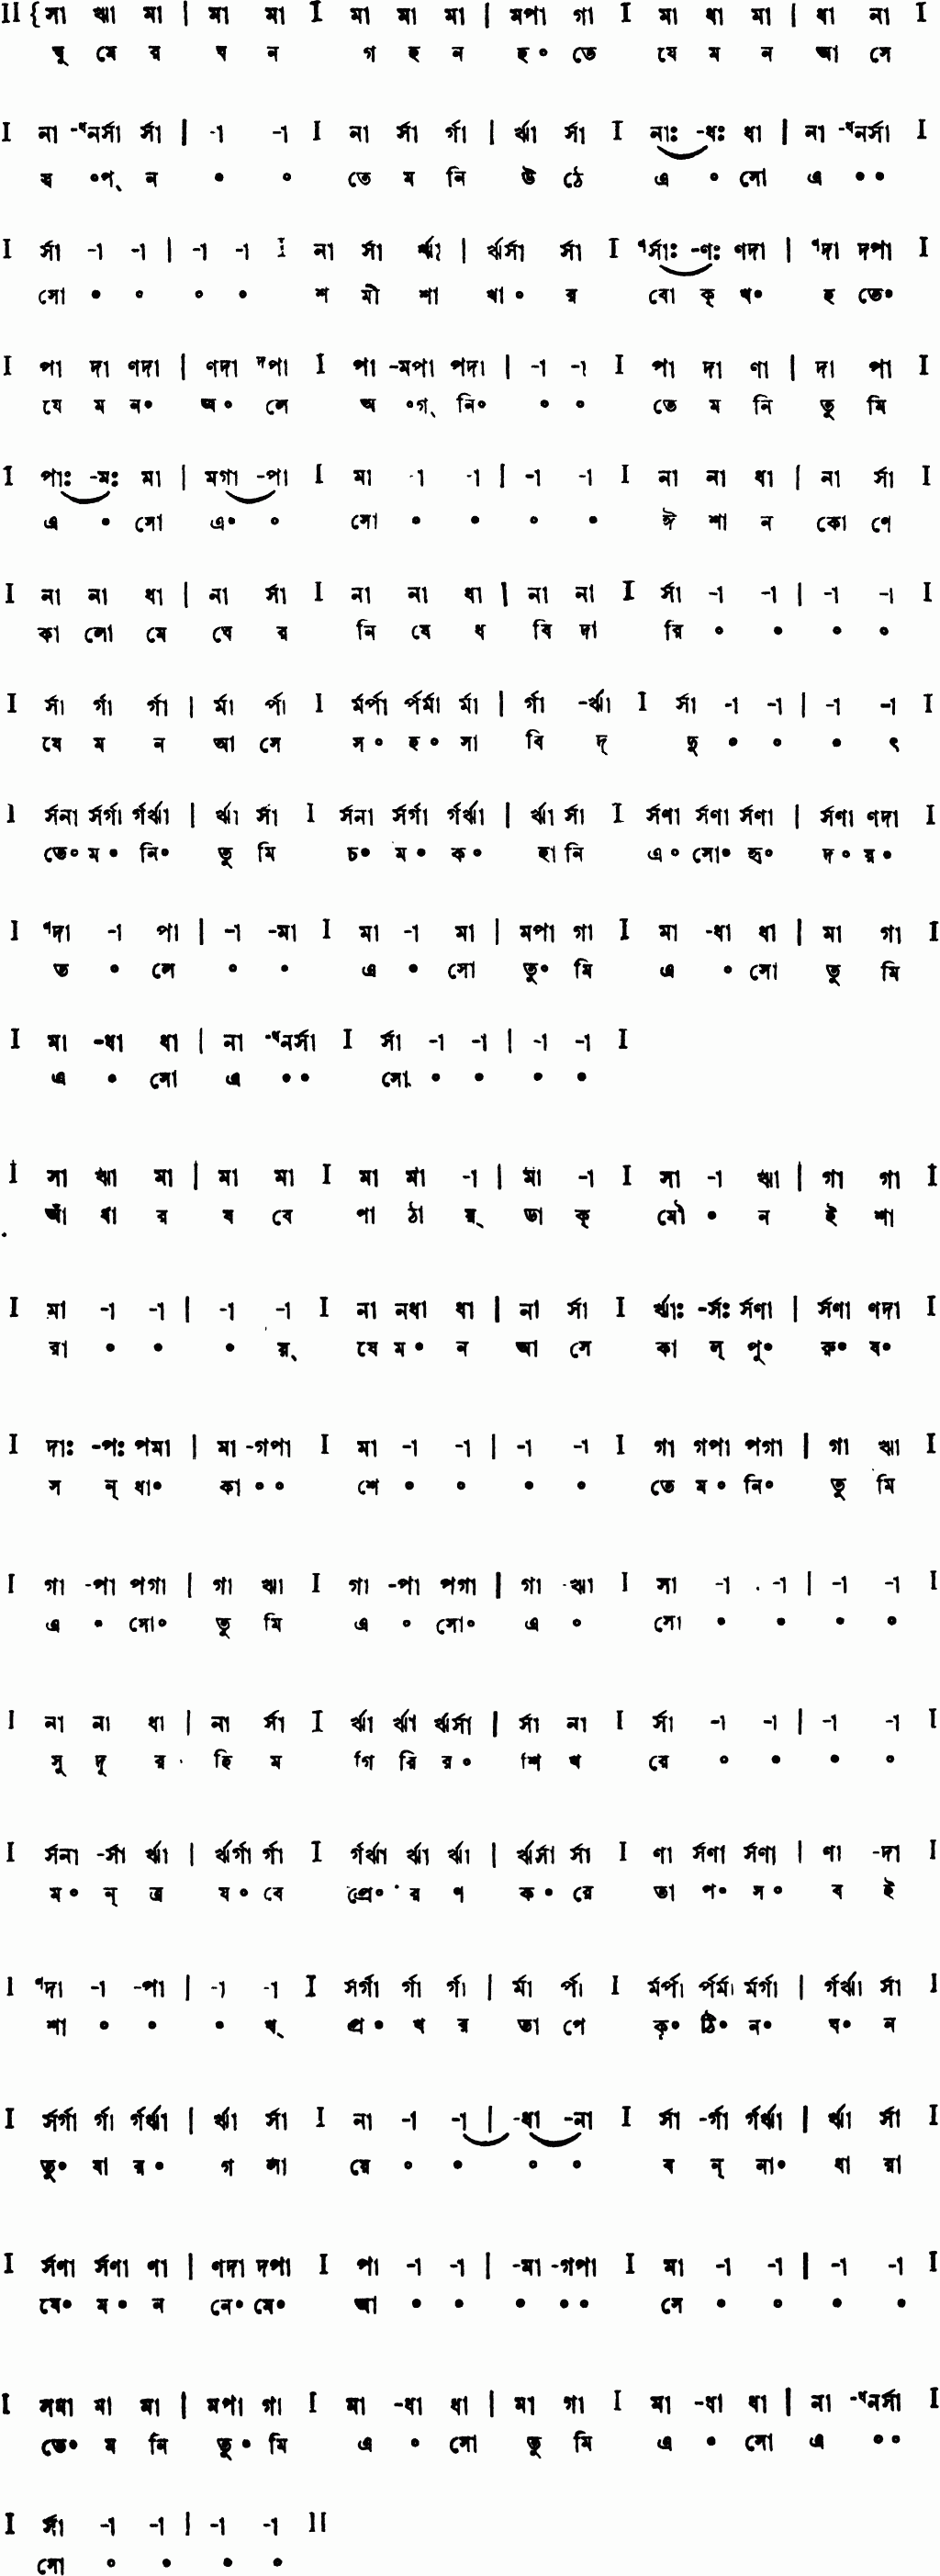 Notation ghumer ghano